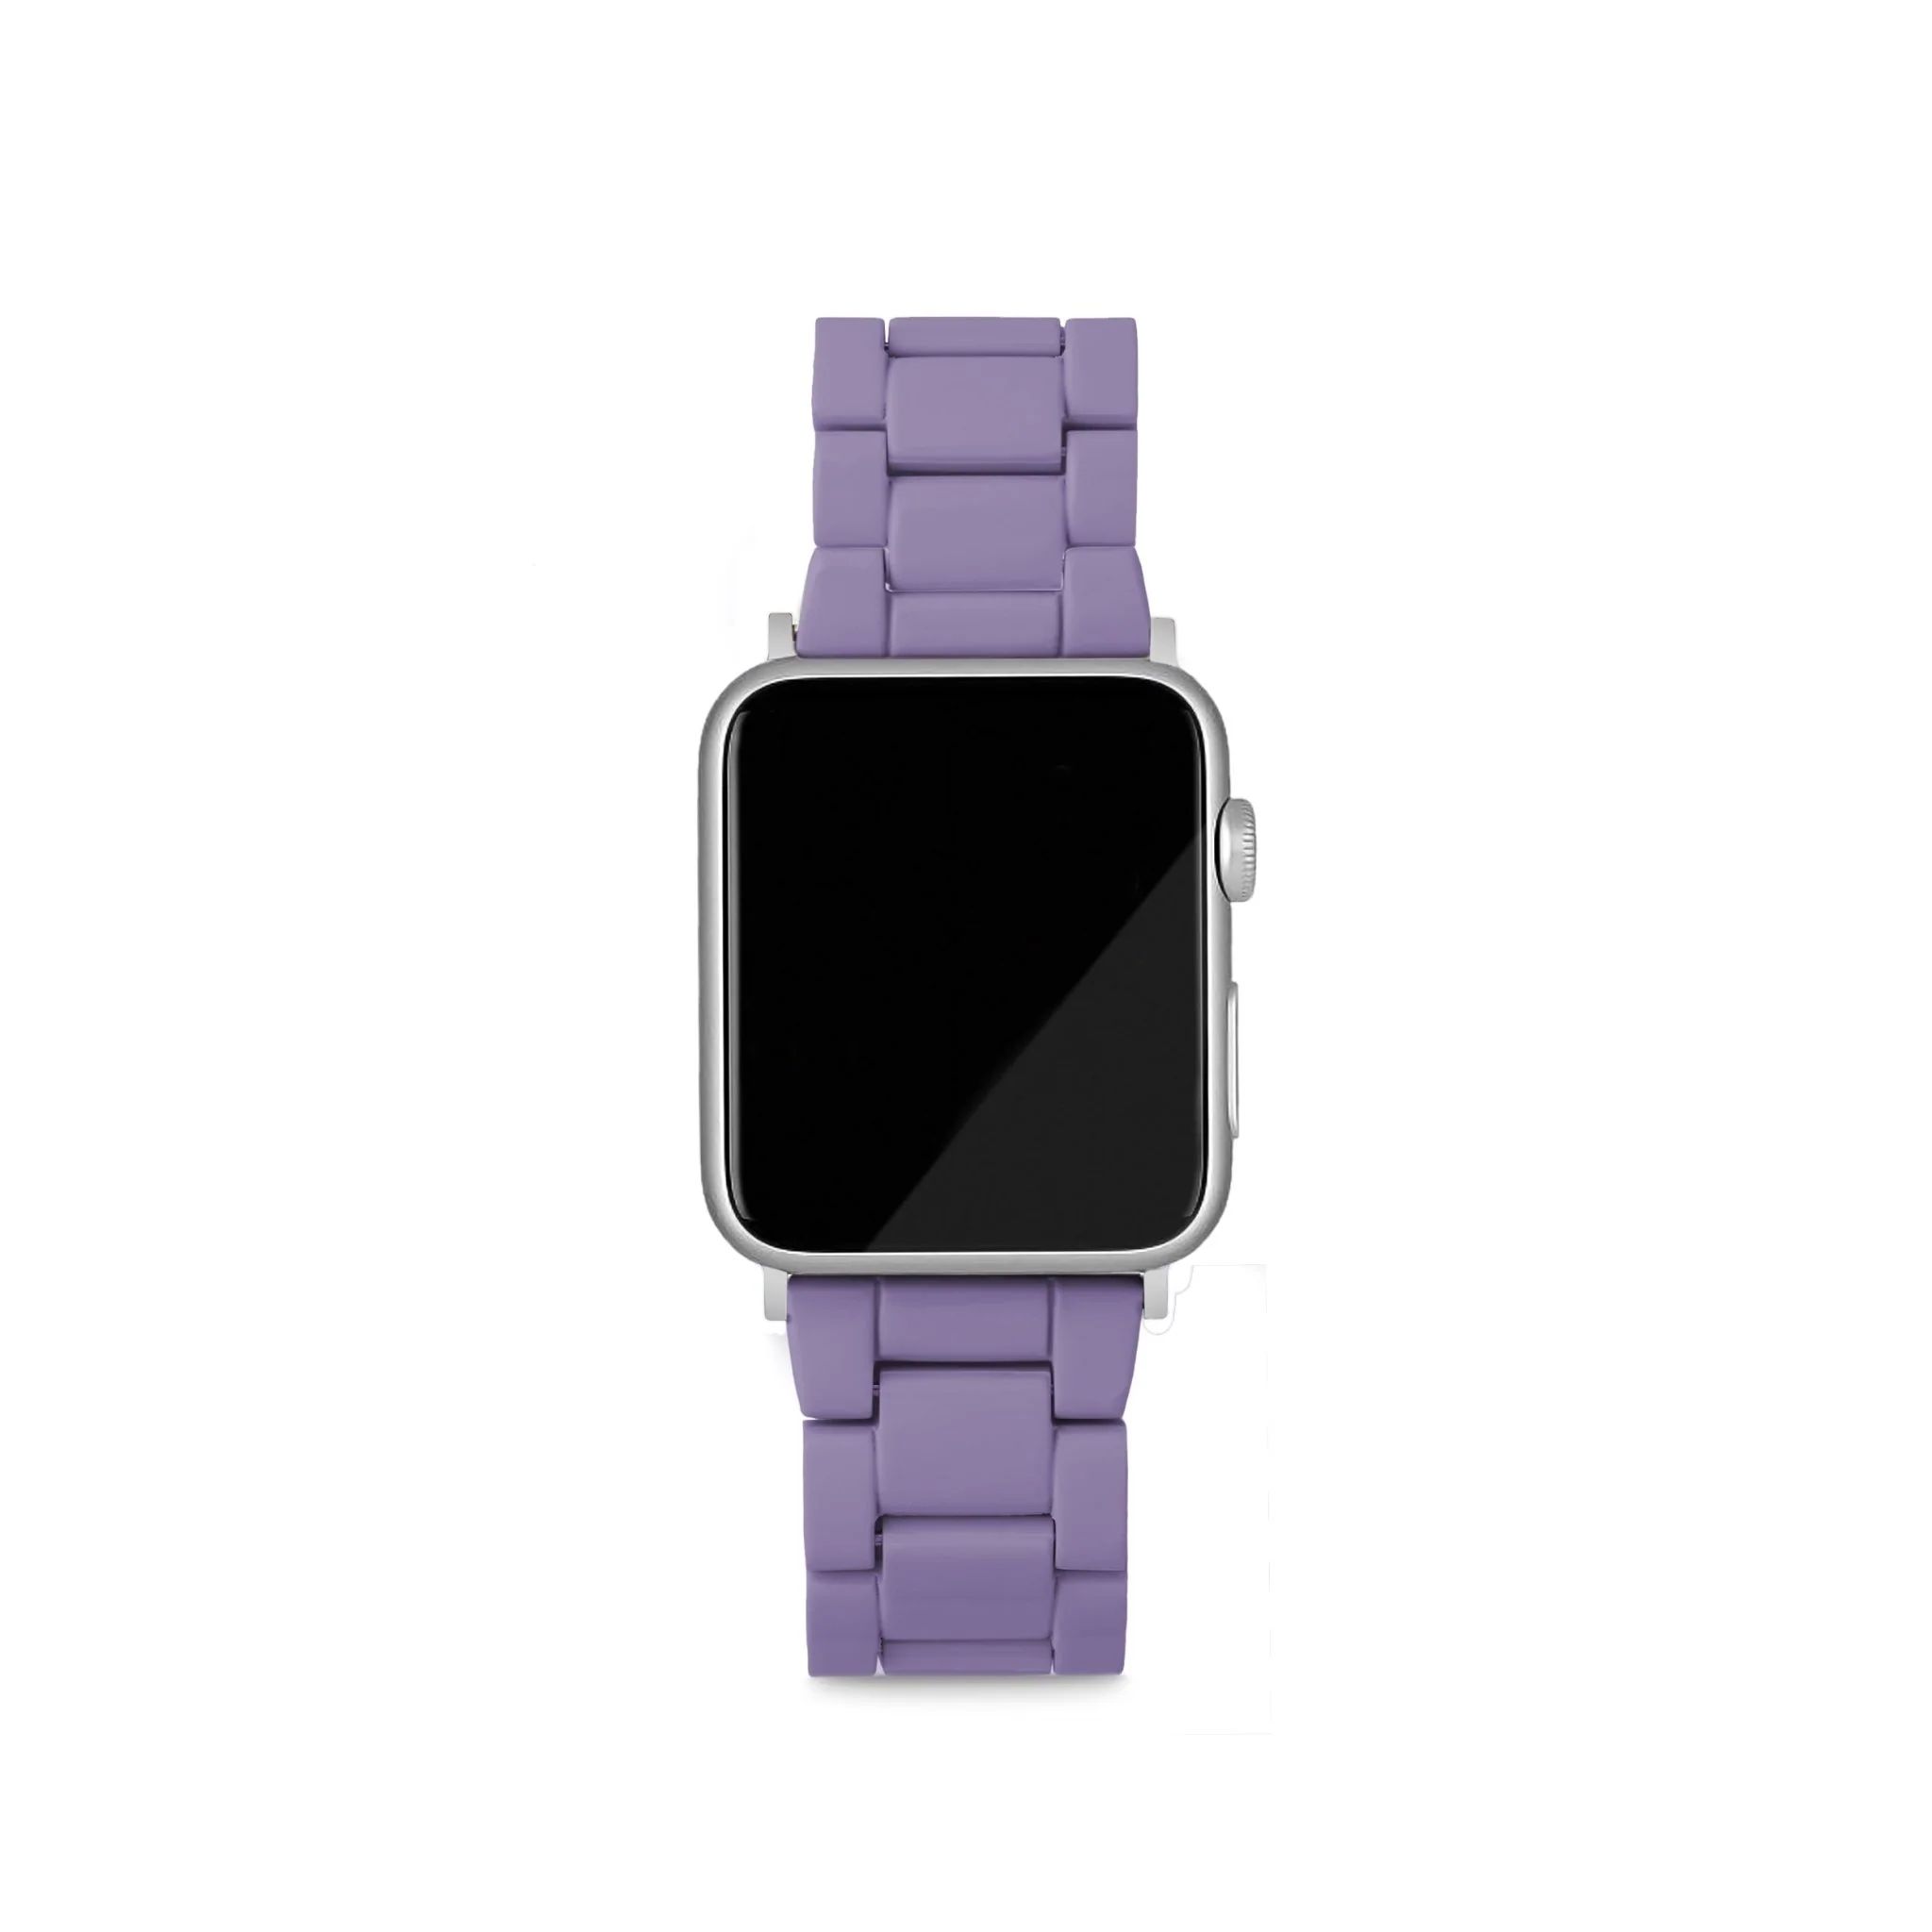 Apple Watch Band in Violet | Machete Jewelry | Machete